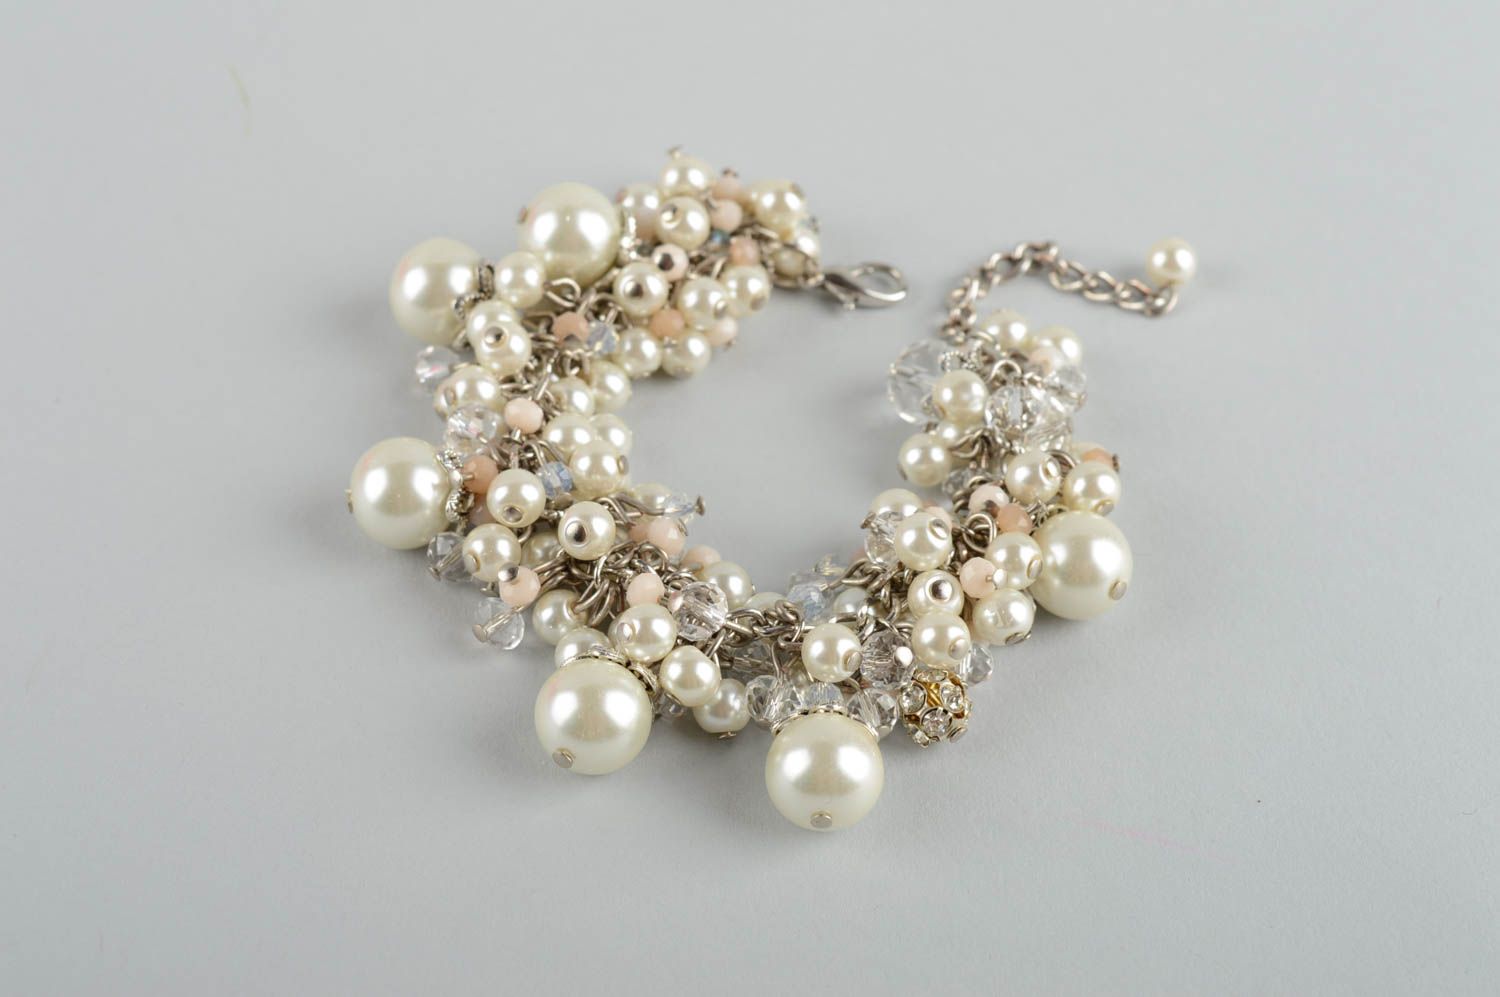 Pearl bracelet handmade jewellery charm bracelet fashion jewelry gifts for her photo 2